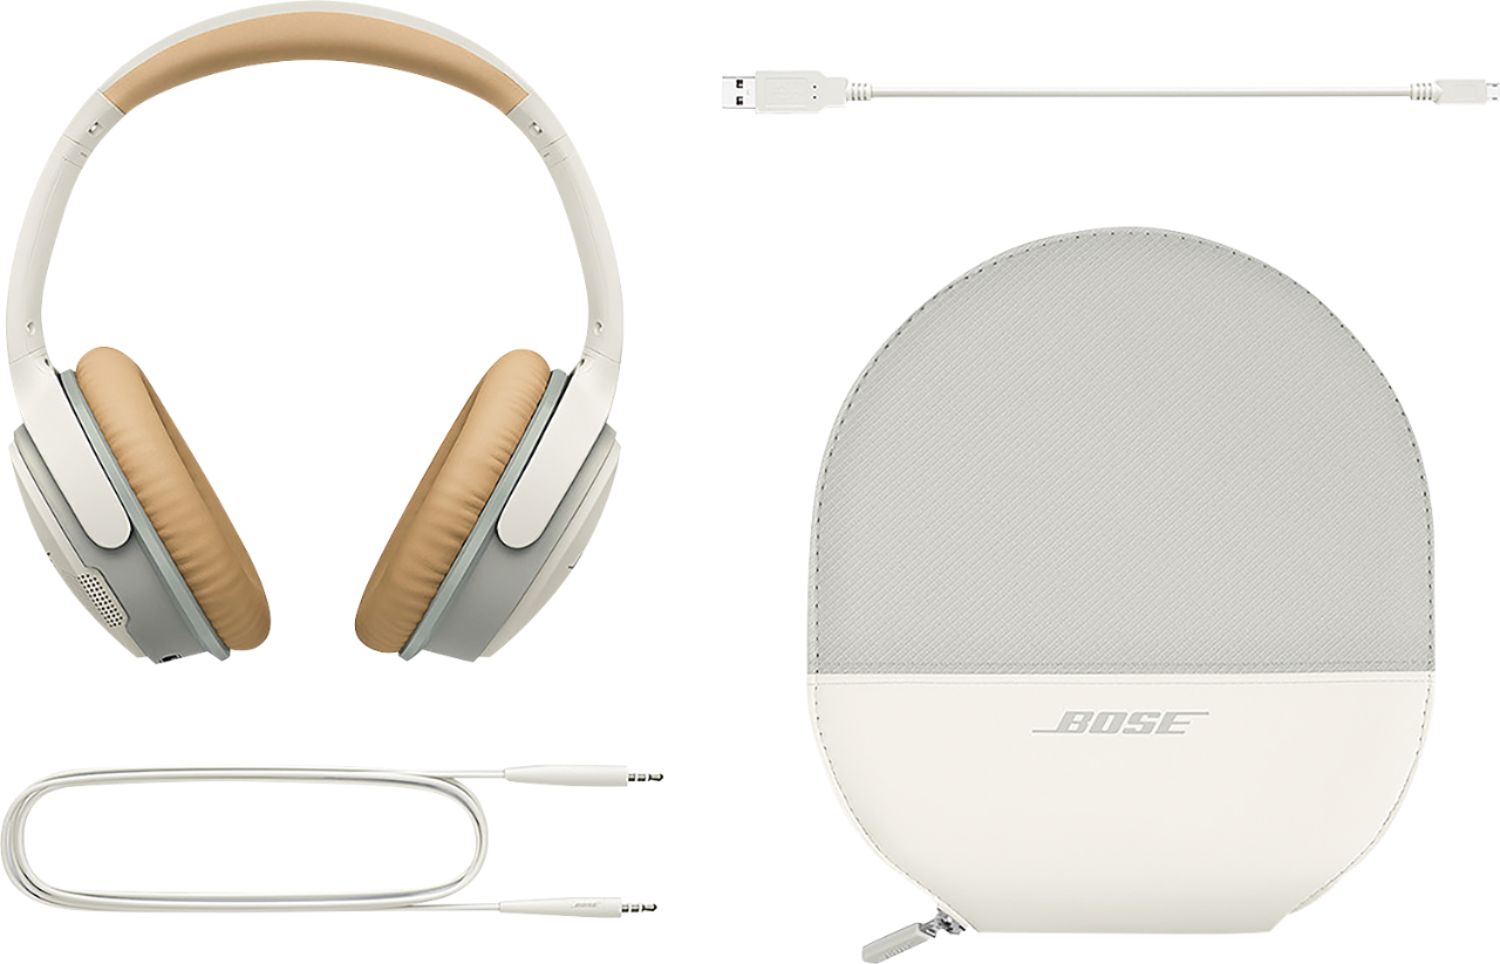 Bose SoundLink Around-Ear Wireless Headphones II review: A very